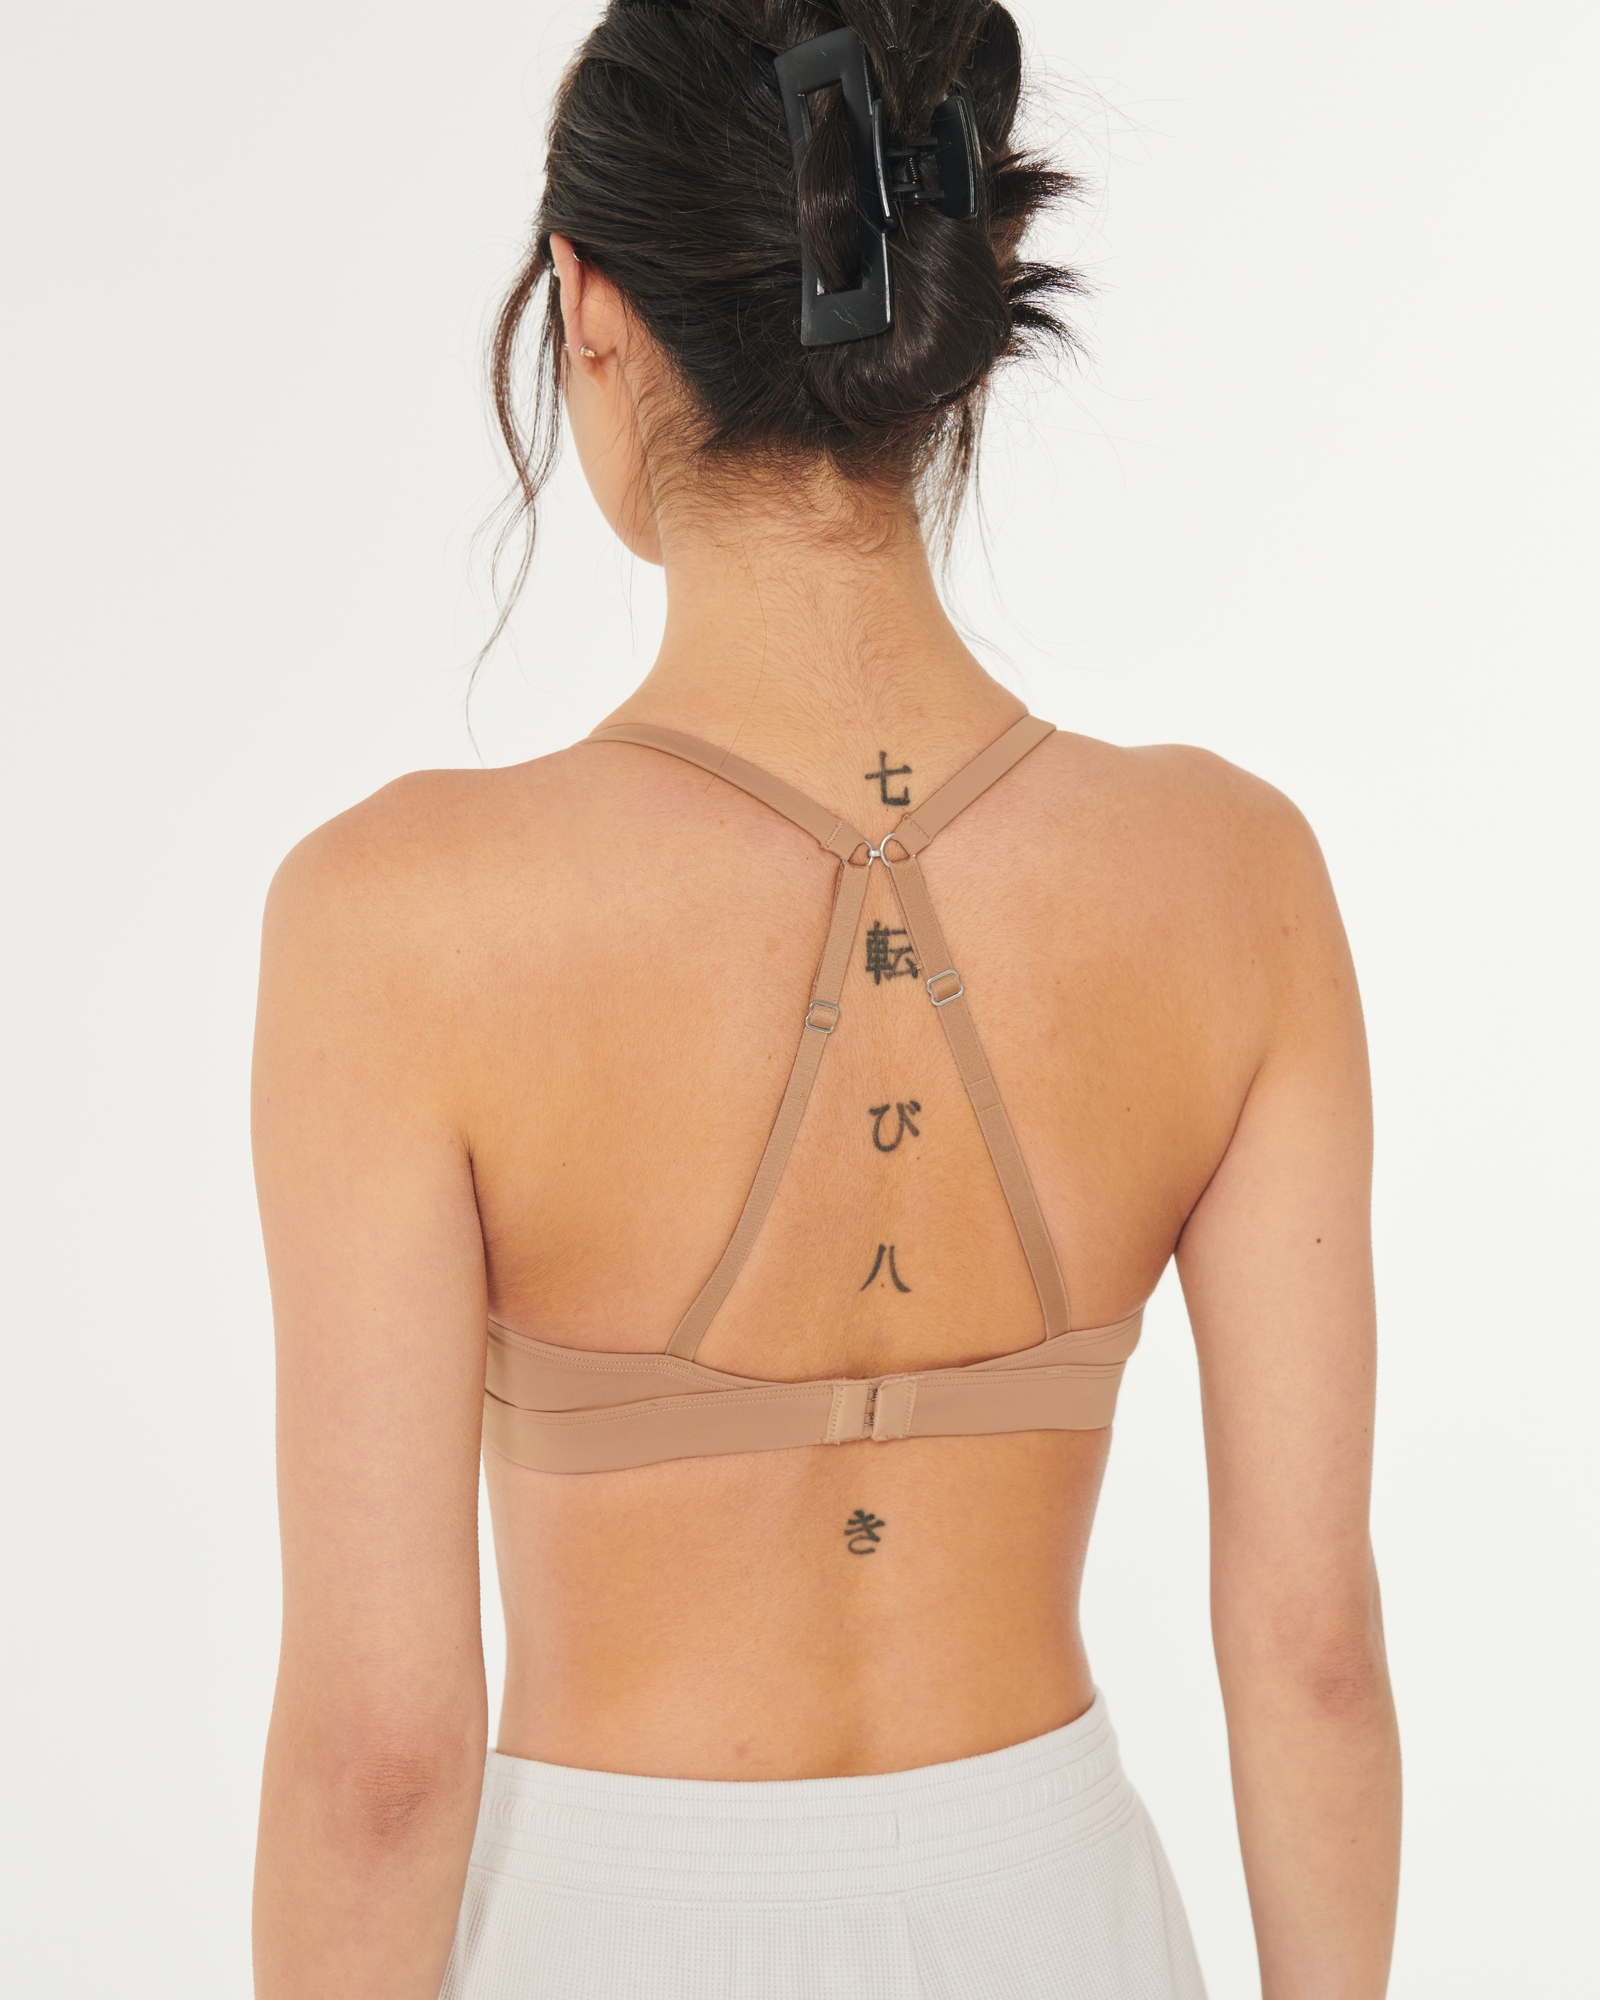 Women's Gilly Hicks Micro-Modal Triangle Bralette, Women's Bras &  Underwear